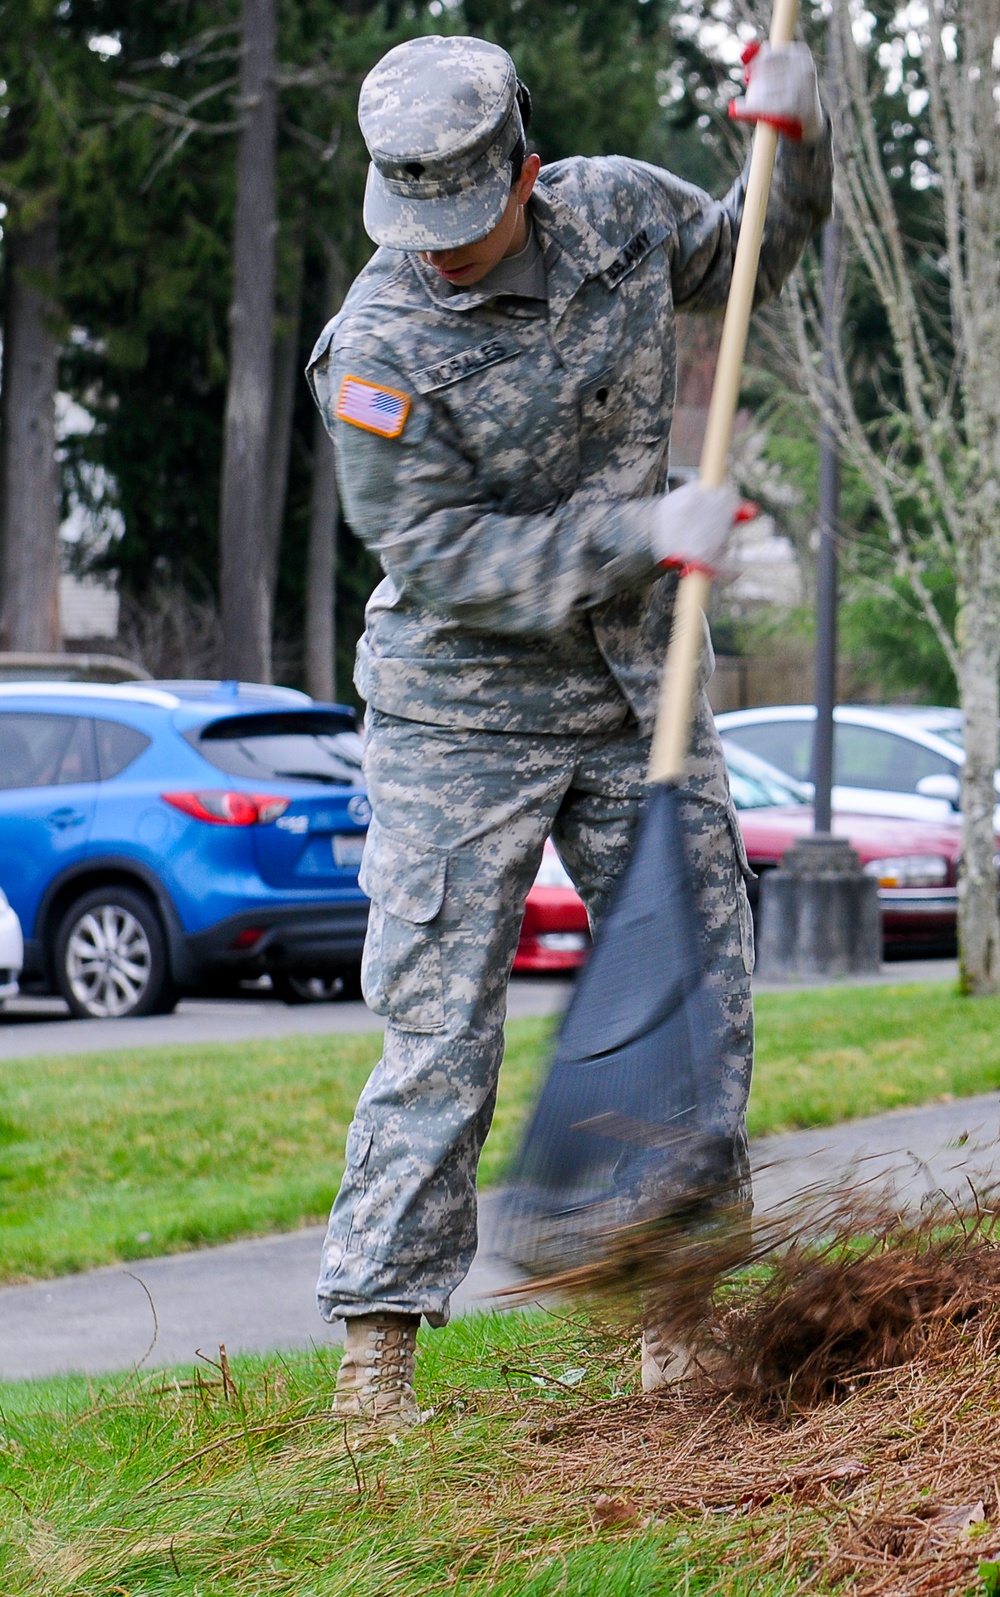 JBLM Soldiers help clean up local elementary school campus